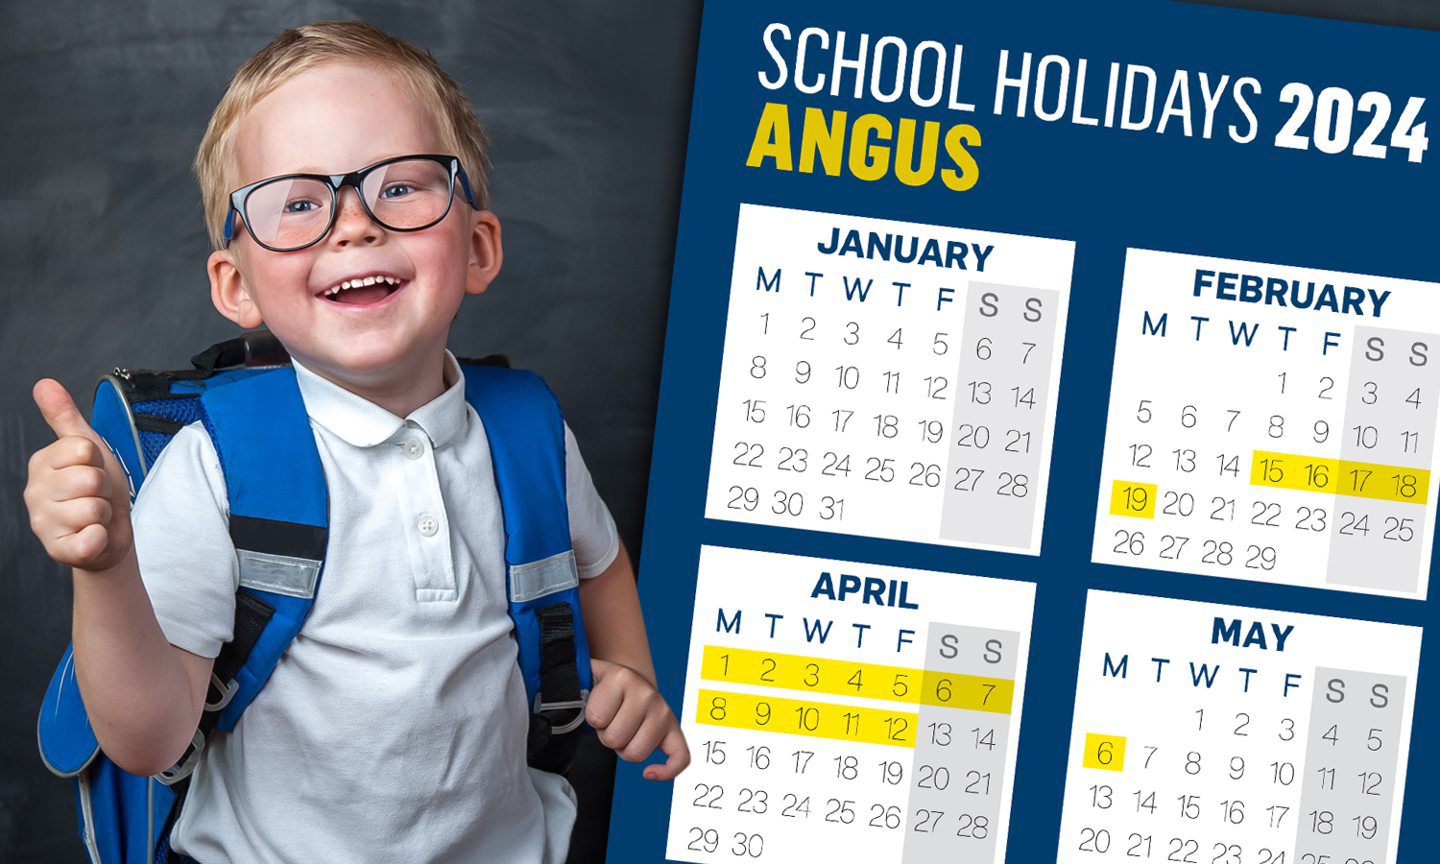 Angus school holidays 2024 with printerfriendly calendars